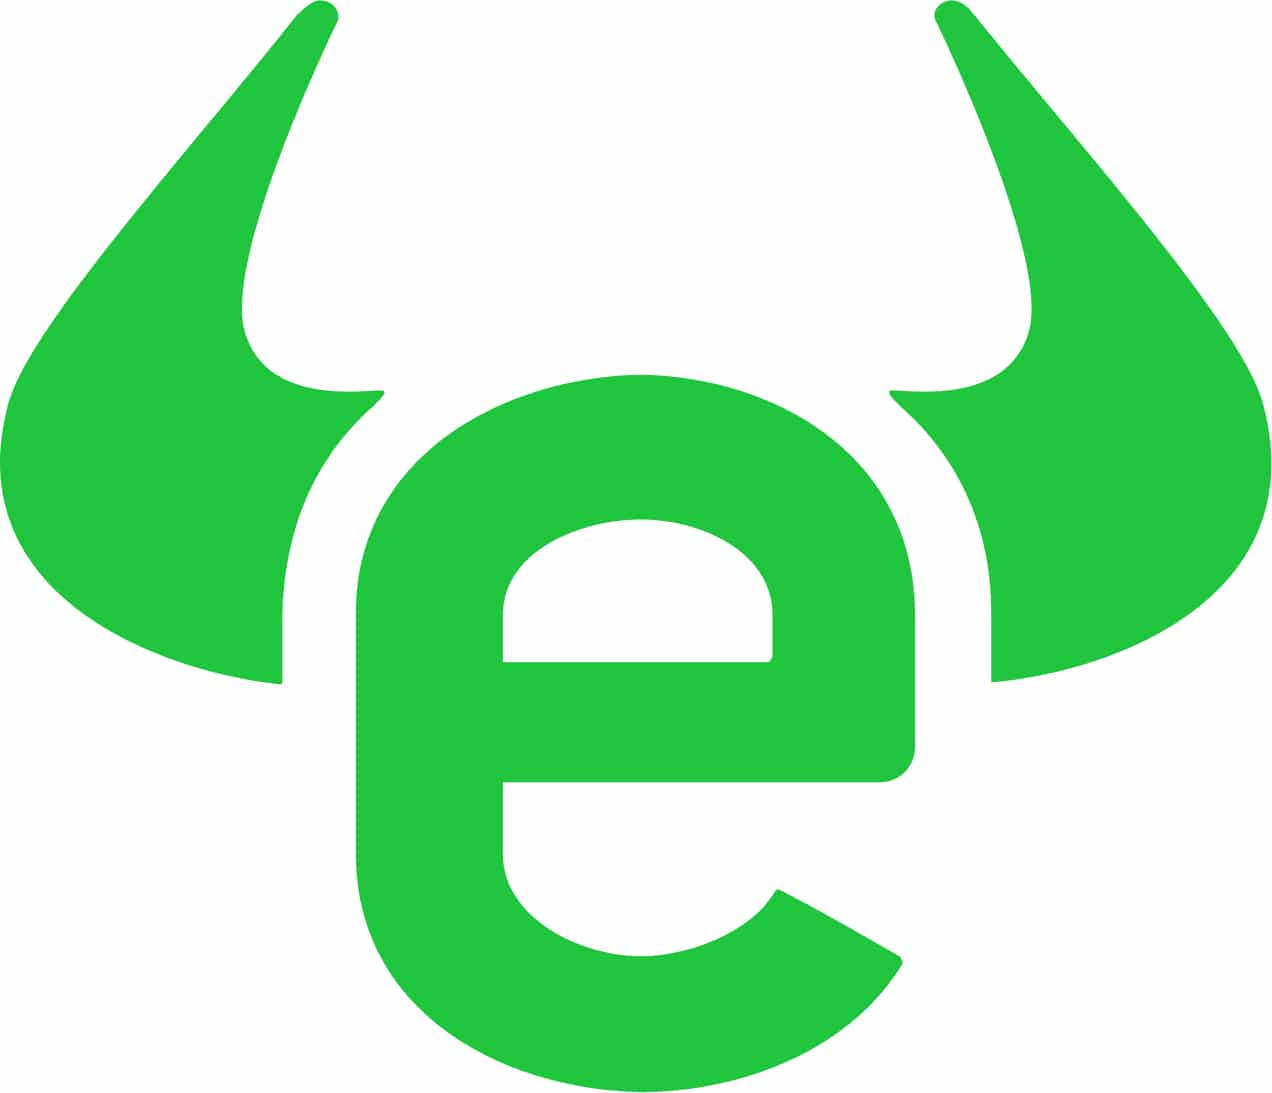 etoro logo where to buy Tesla shares